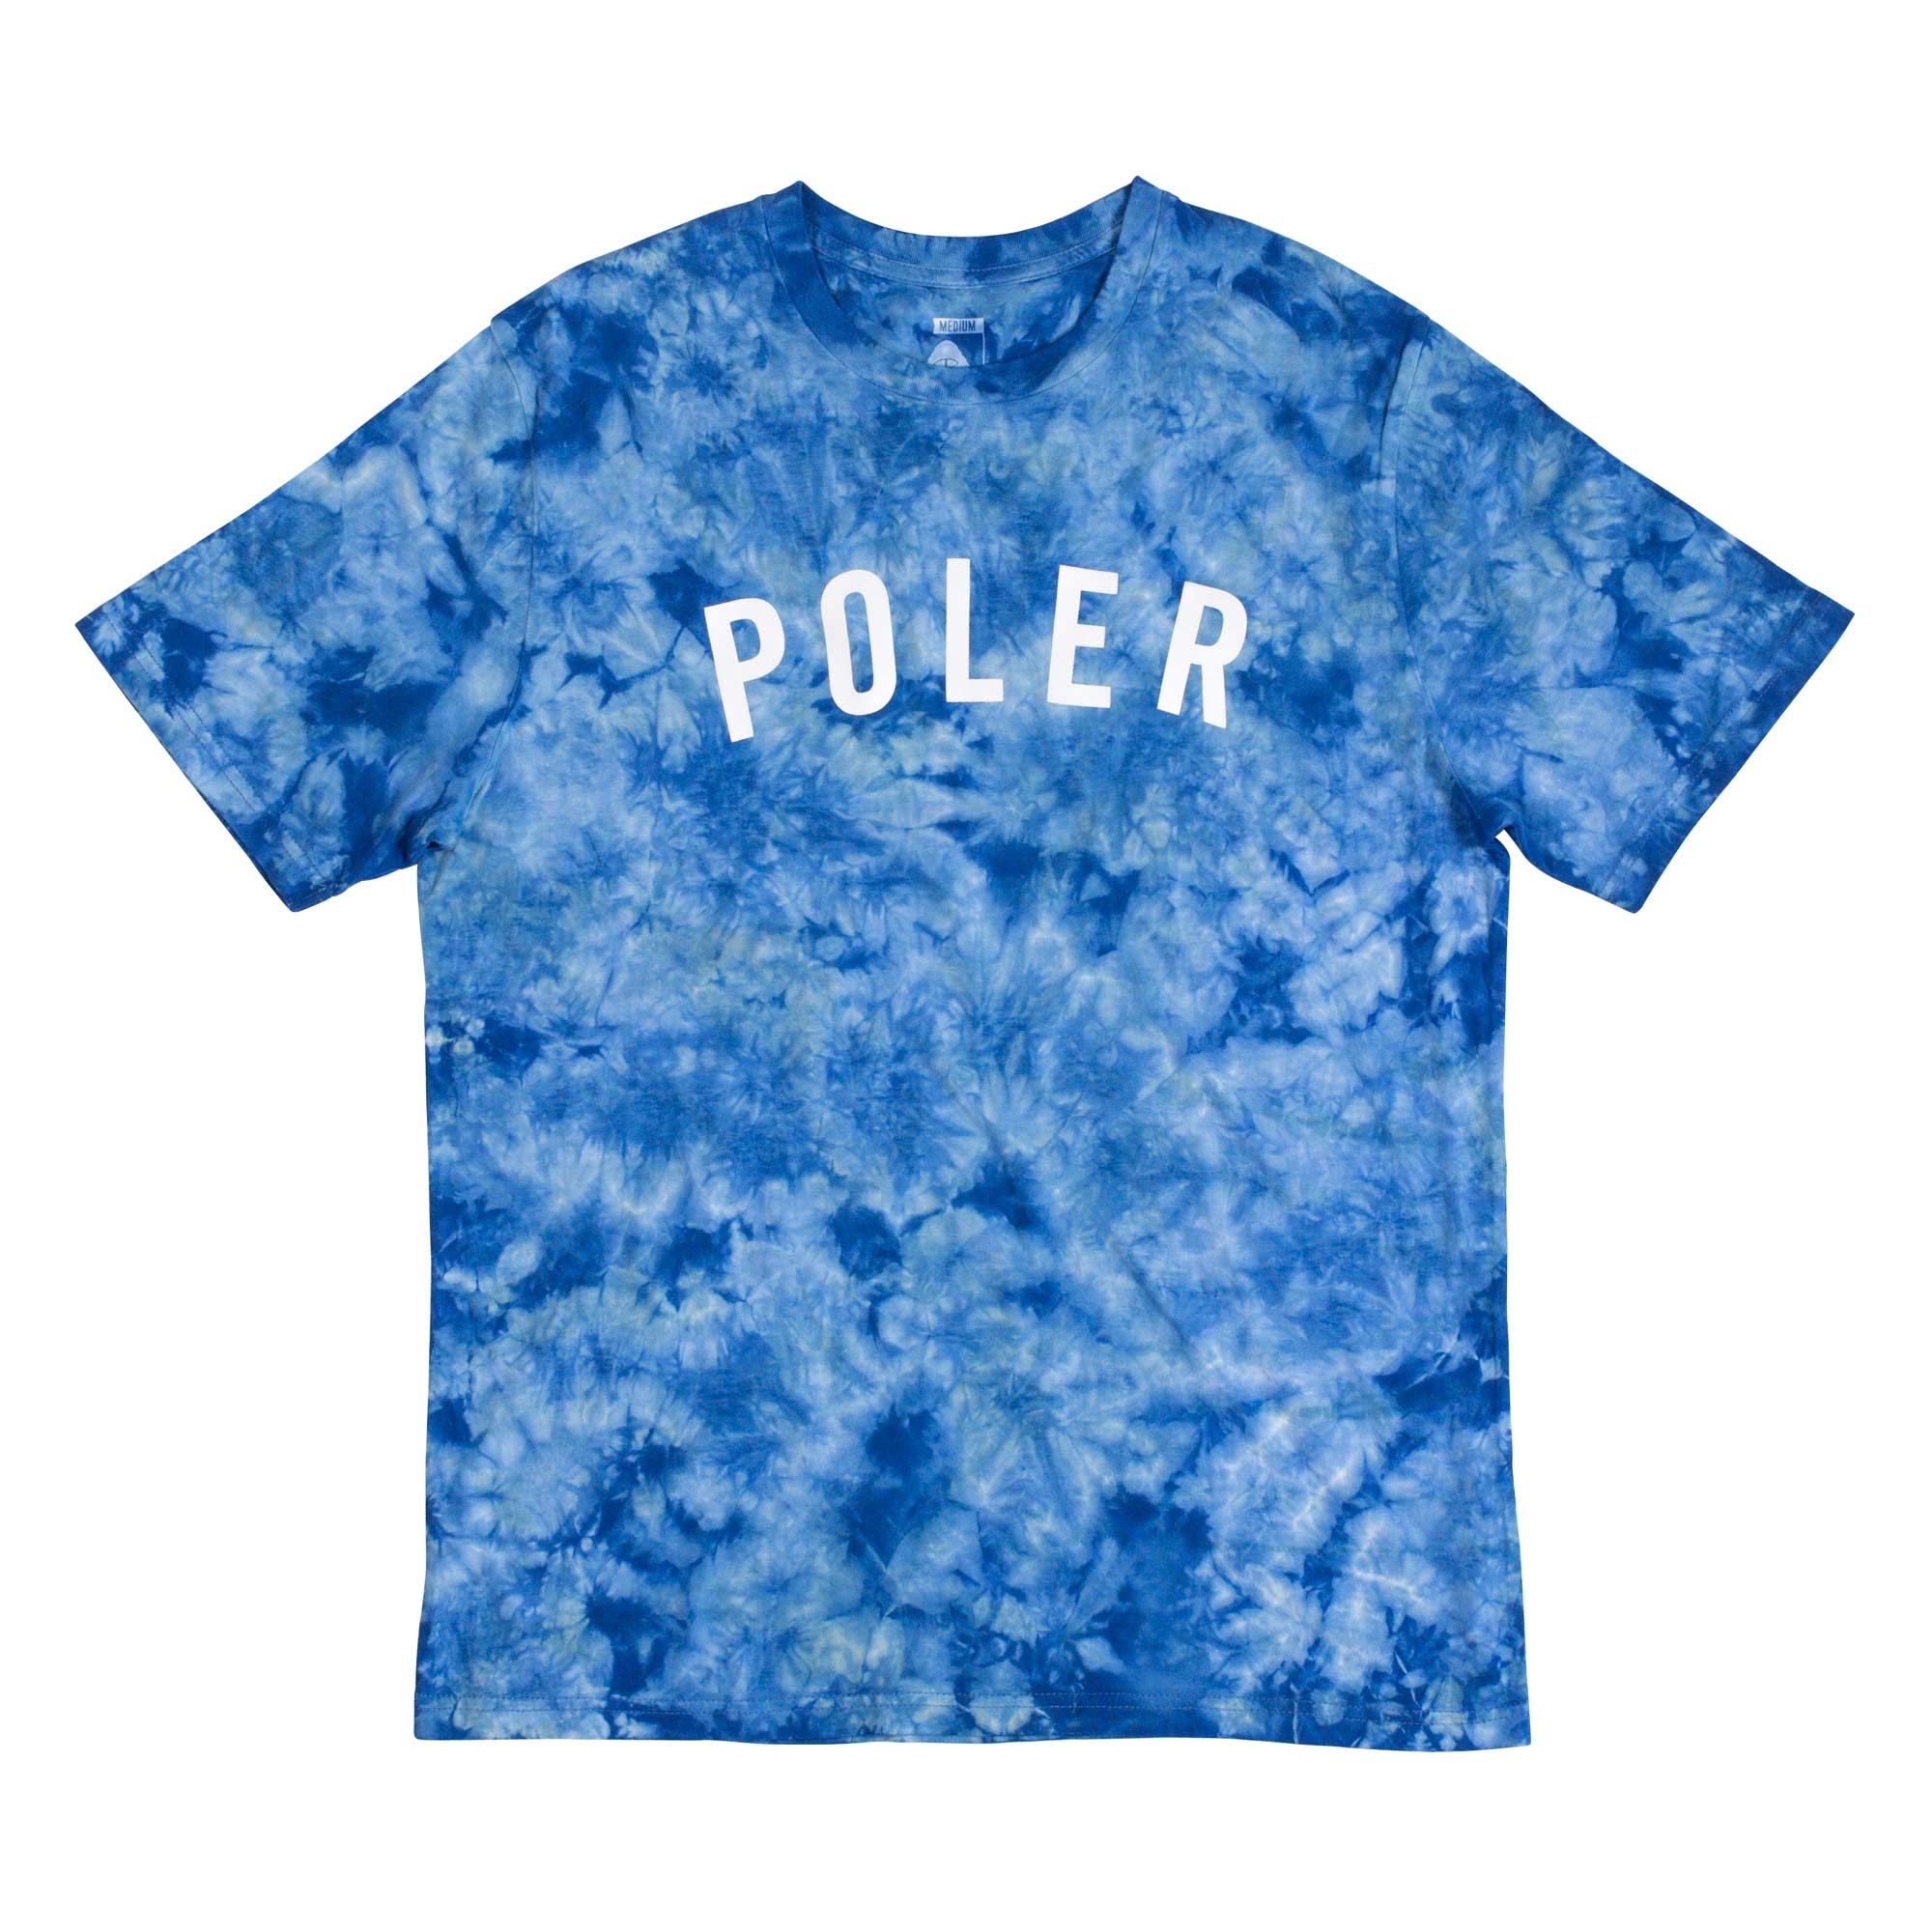 POLER T-Shirt STATE, tie dye blue